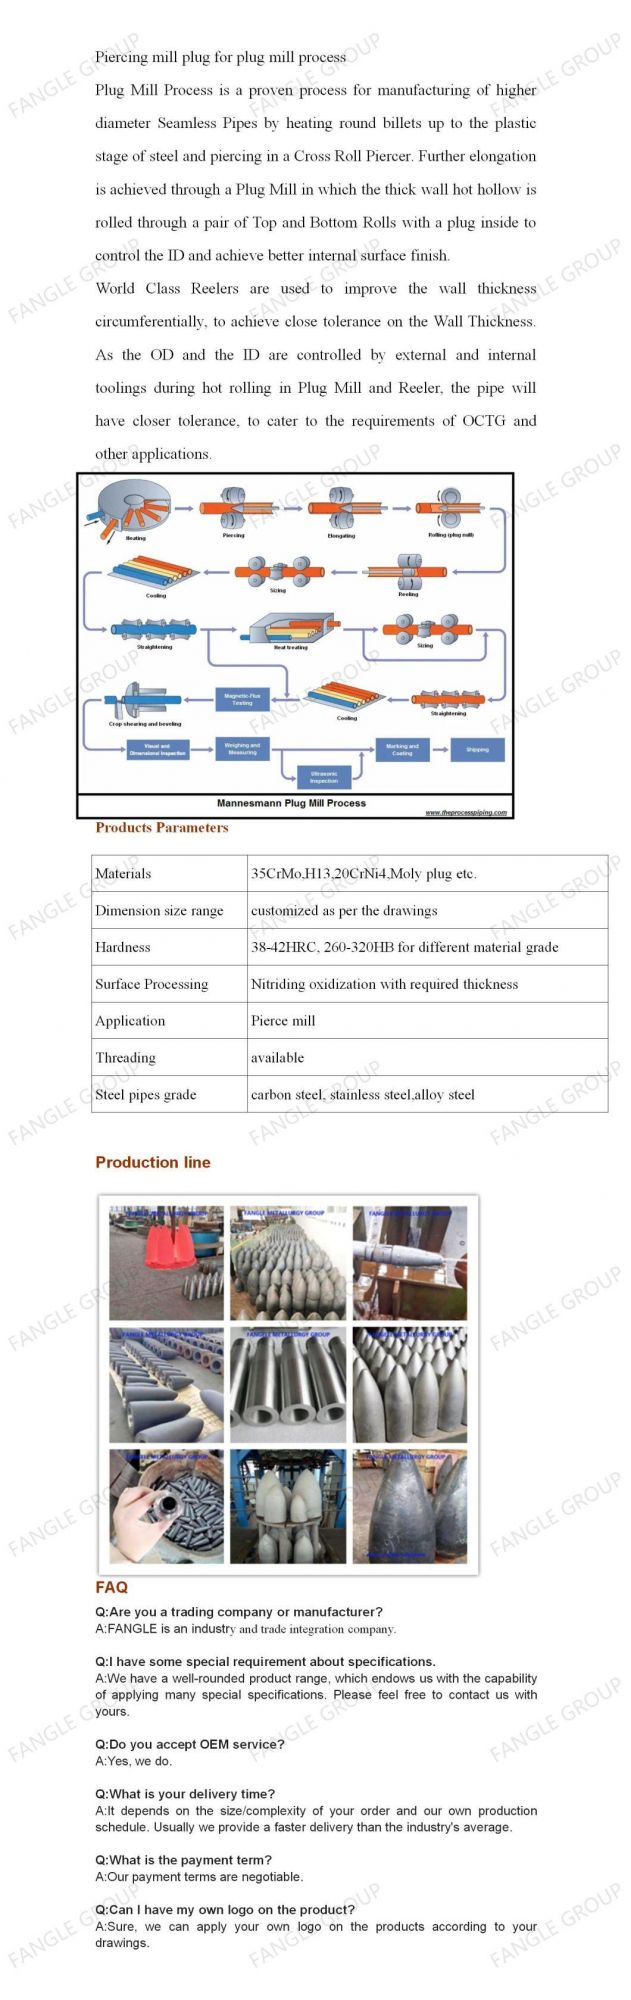 Piercing Mill Plug for Plug Mill Process